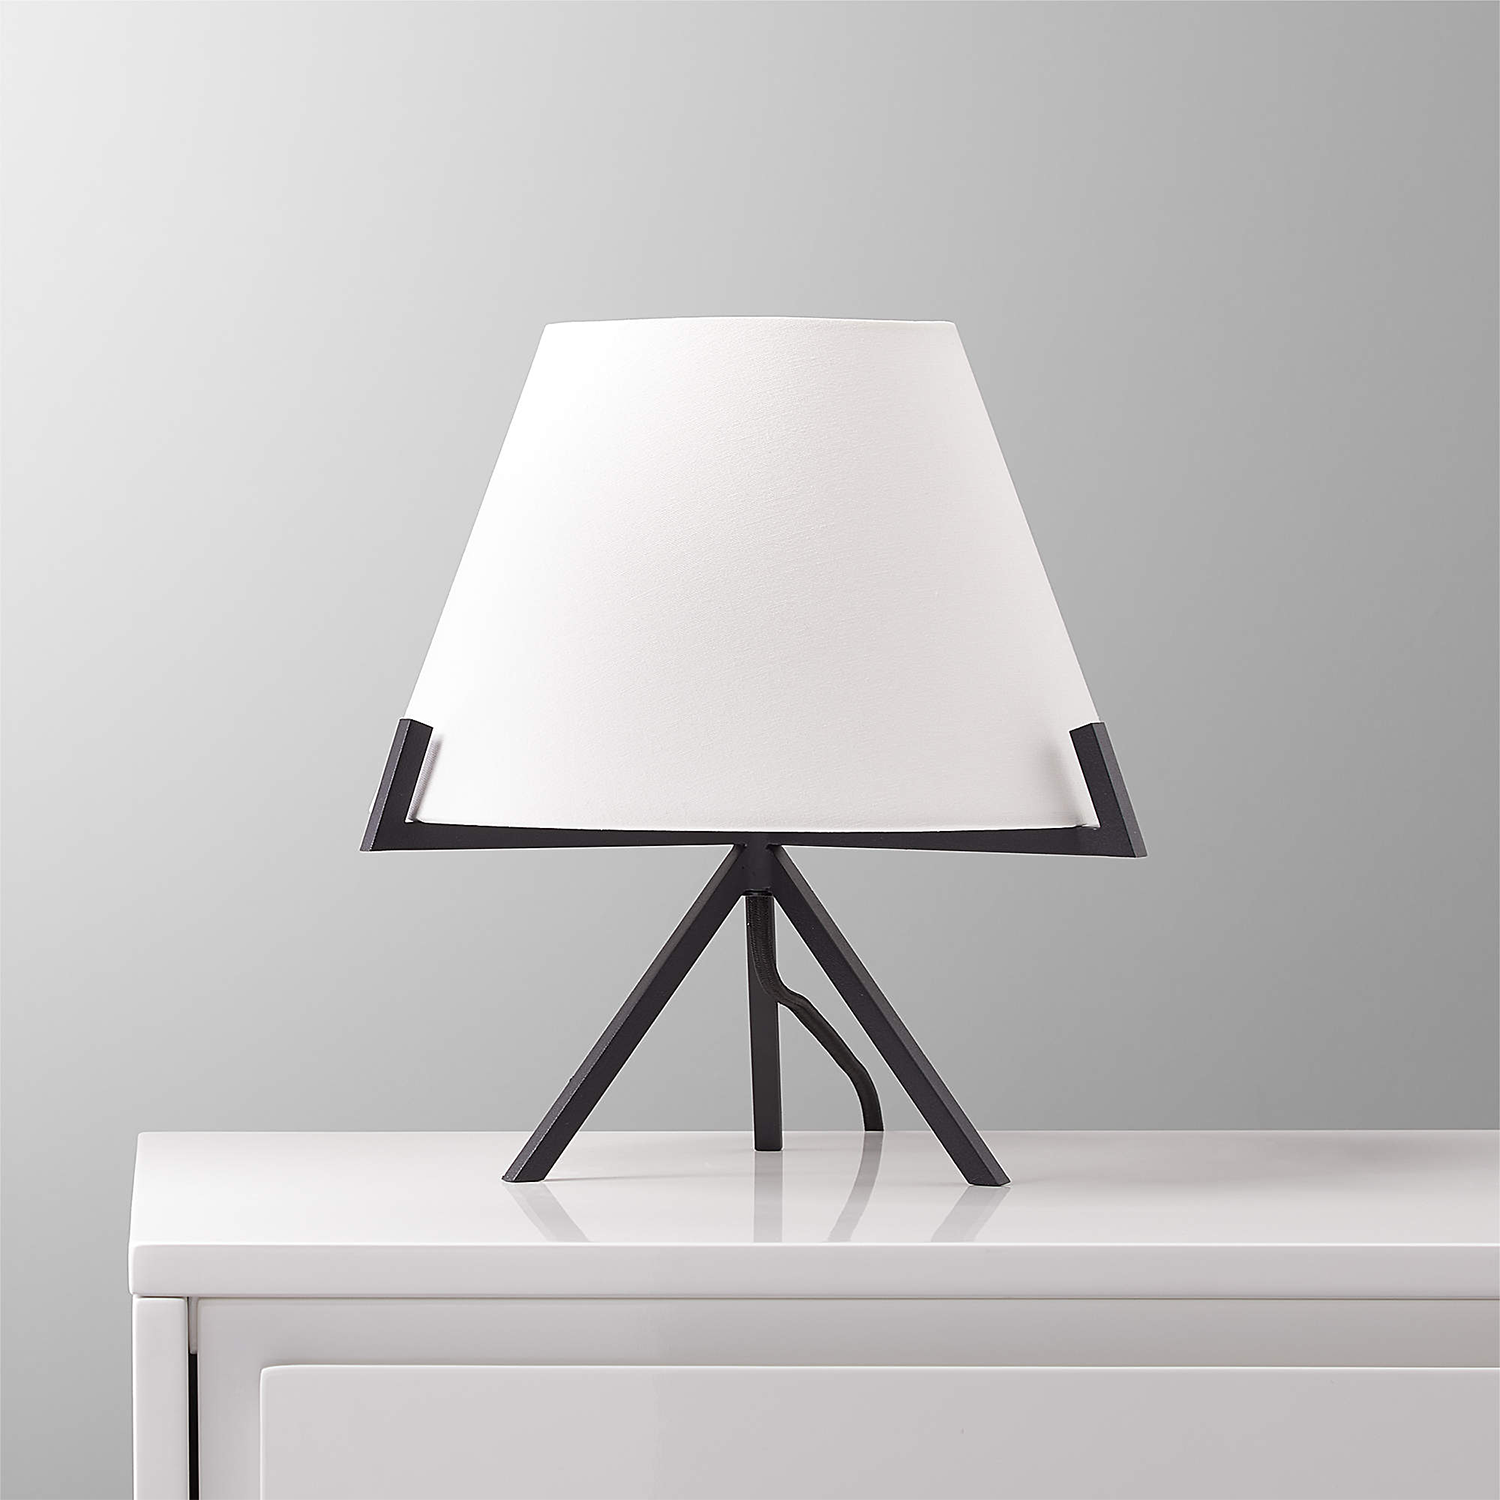 ORNADO SMALL BLACK TABLE LAMP